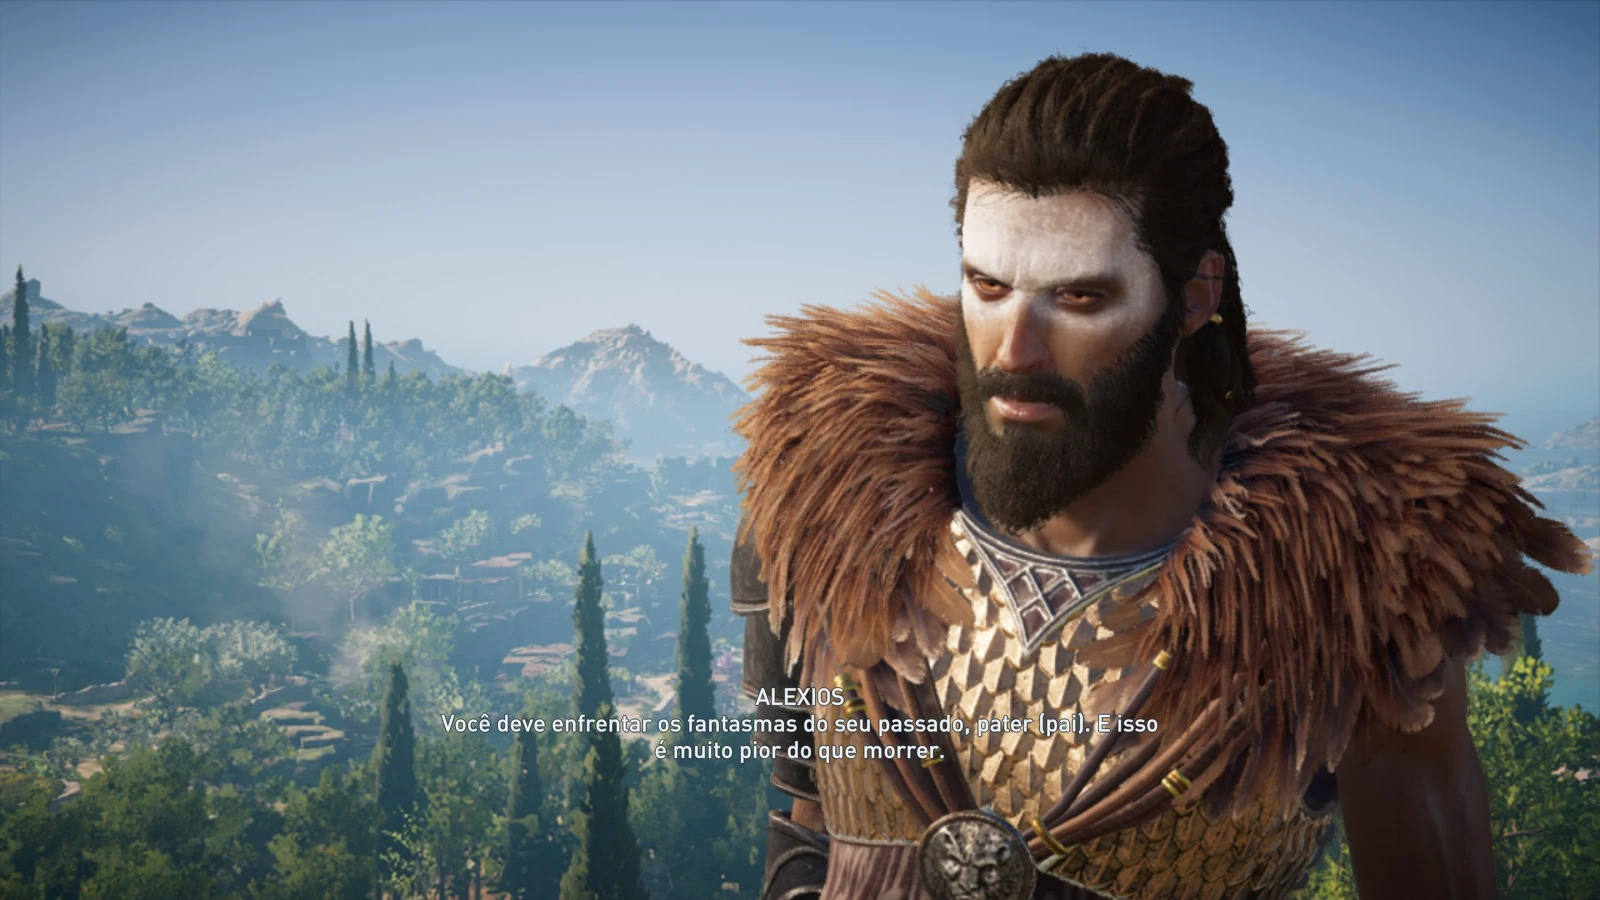 Alexios Beard Cutscenes at Assassin's Creed Odyssey Nexus - and Community